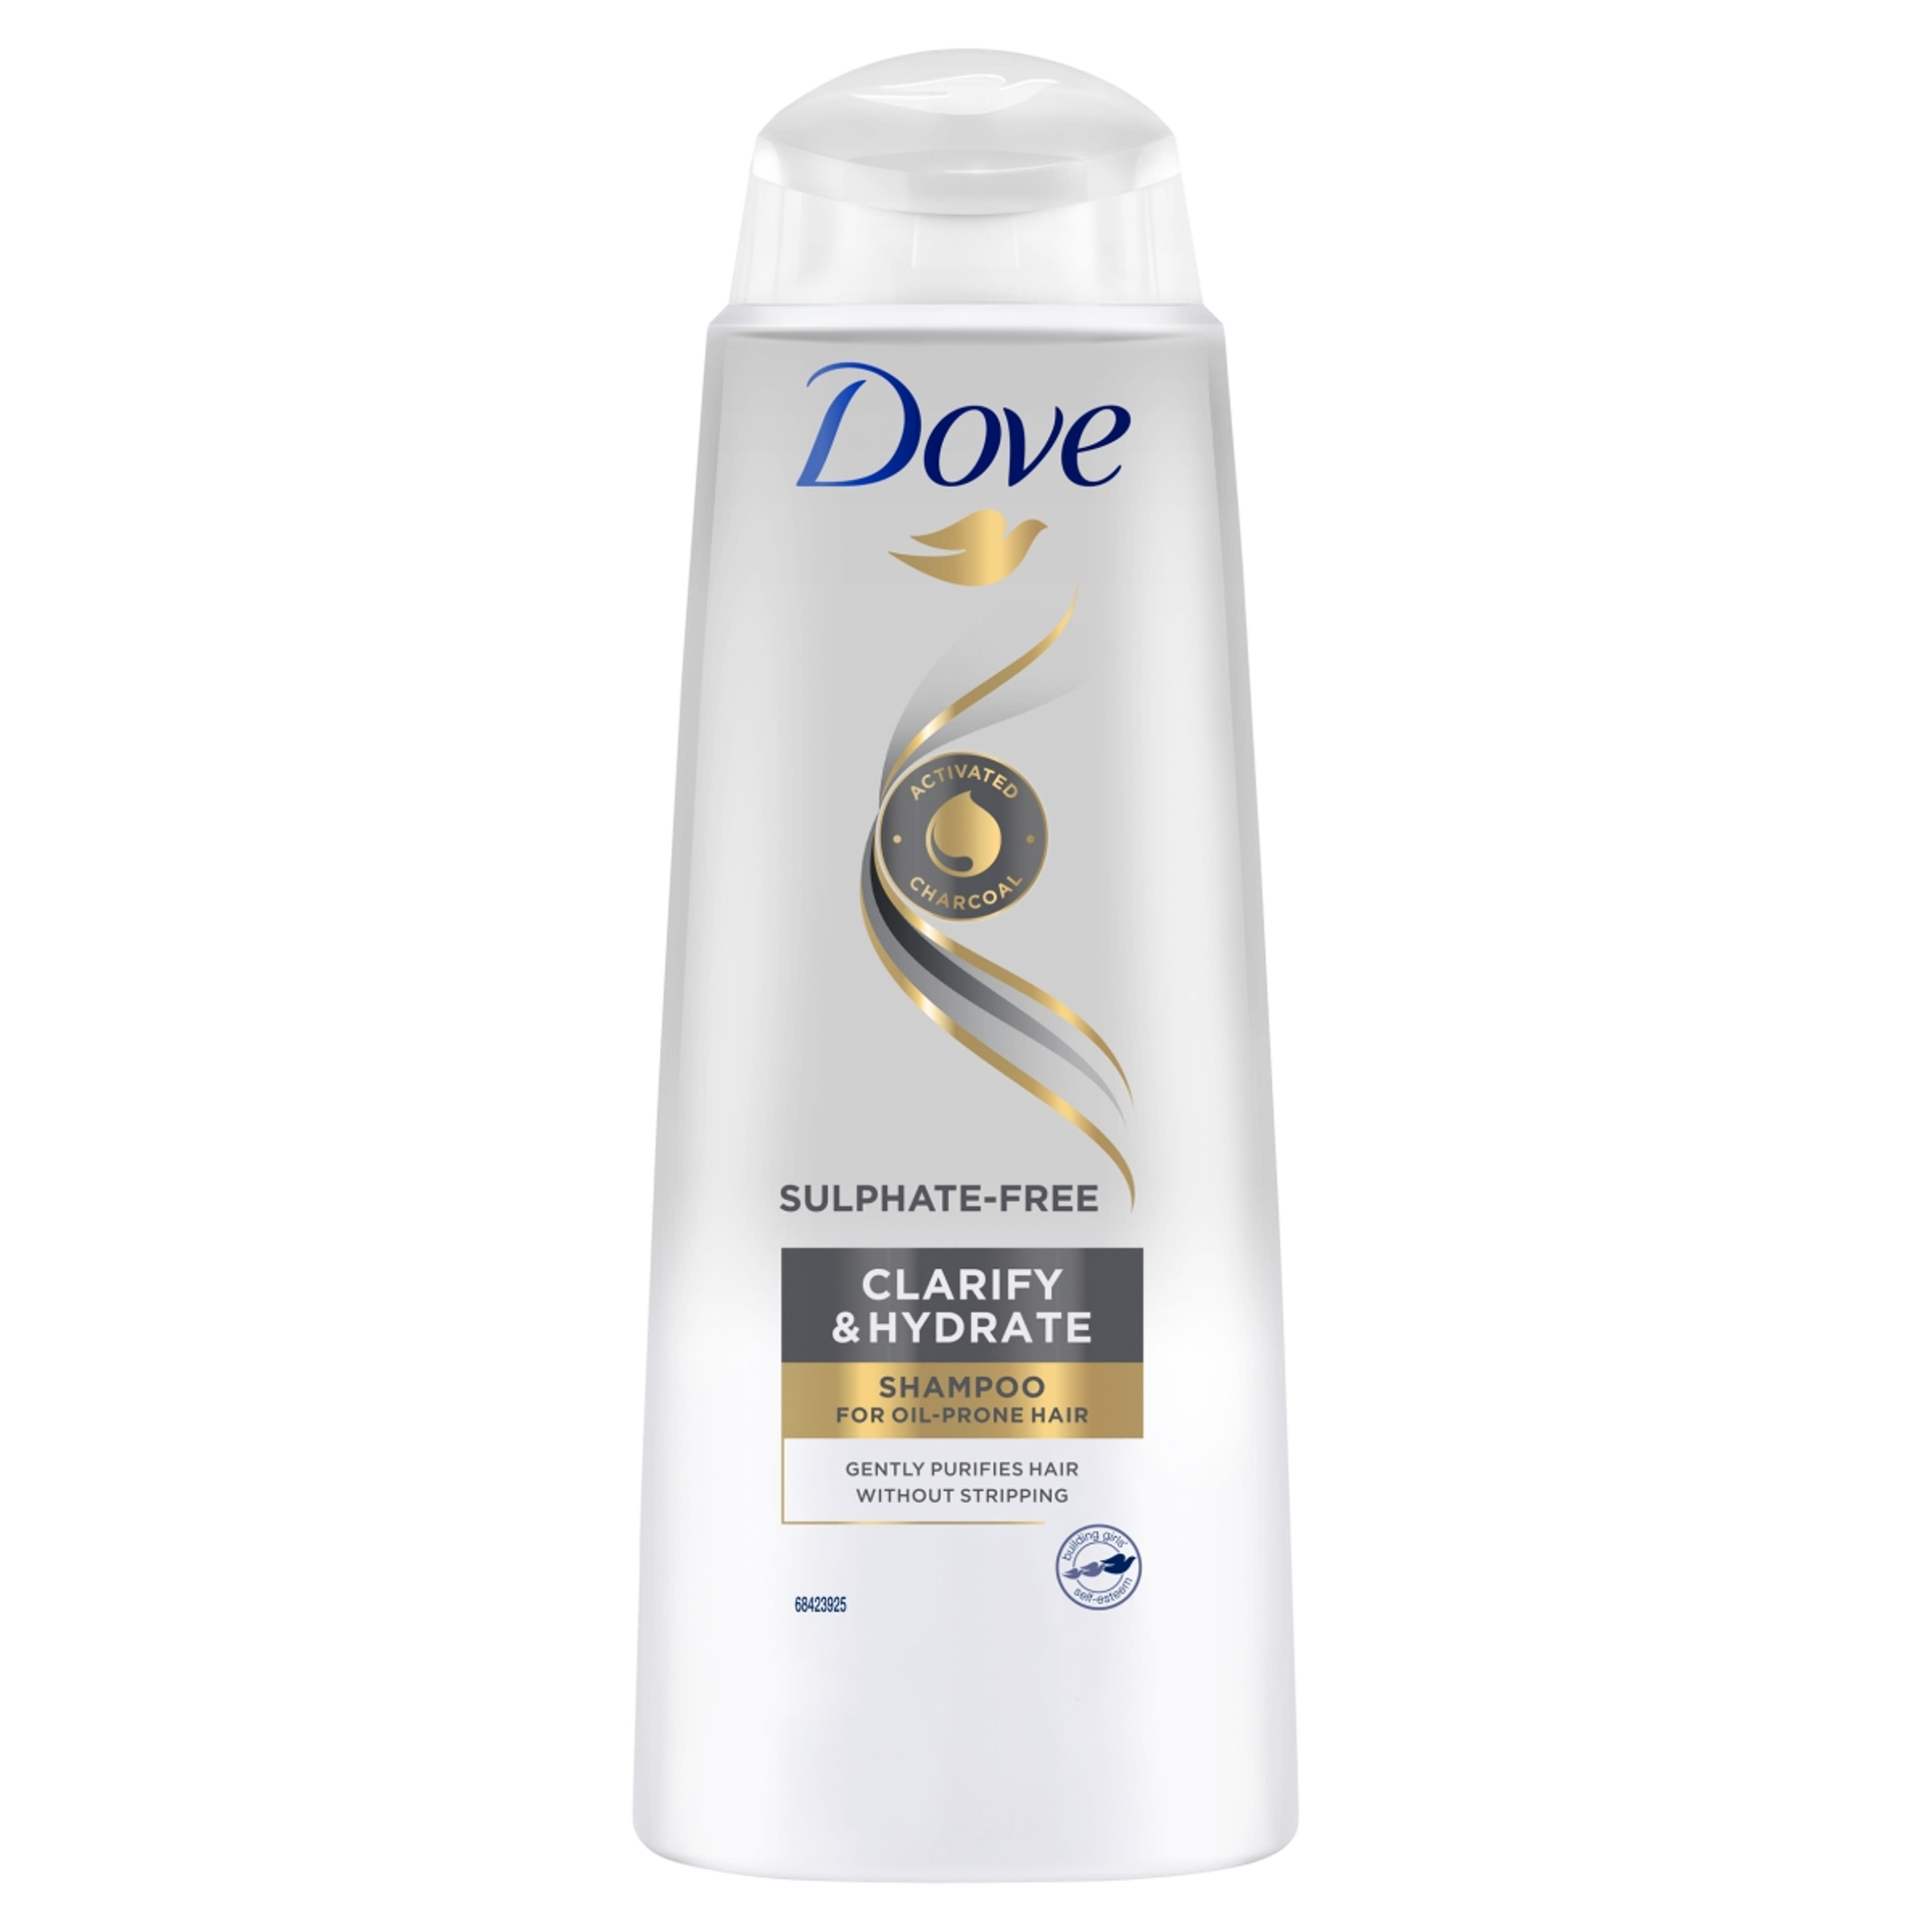 Dove Clarify&Hydrate sampon - 400 ml-1